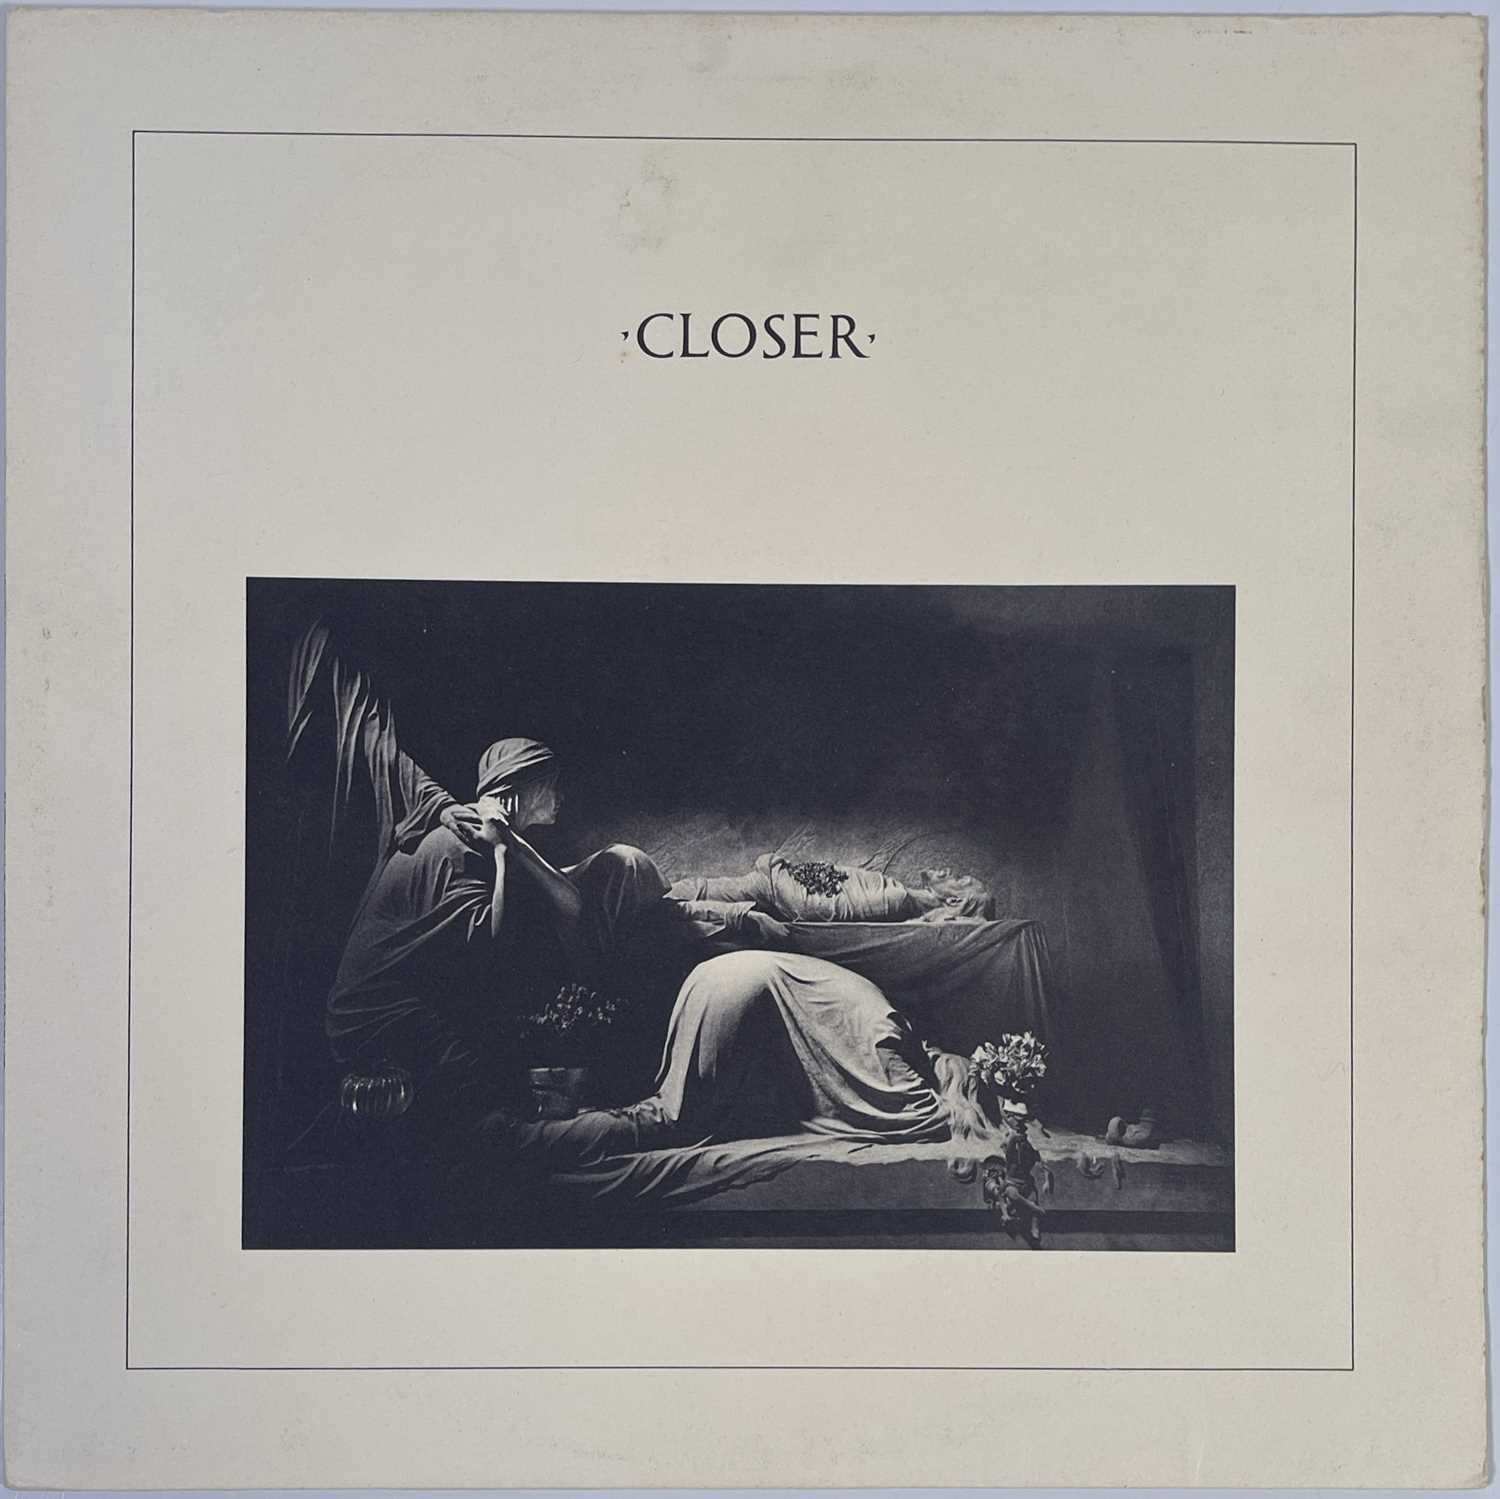 JOY DIVISION - CLOSER LP (UK ORIGINAL - RED TRANSLUCENT - FACTORY - FACT 25) - Image 2 of 6